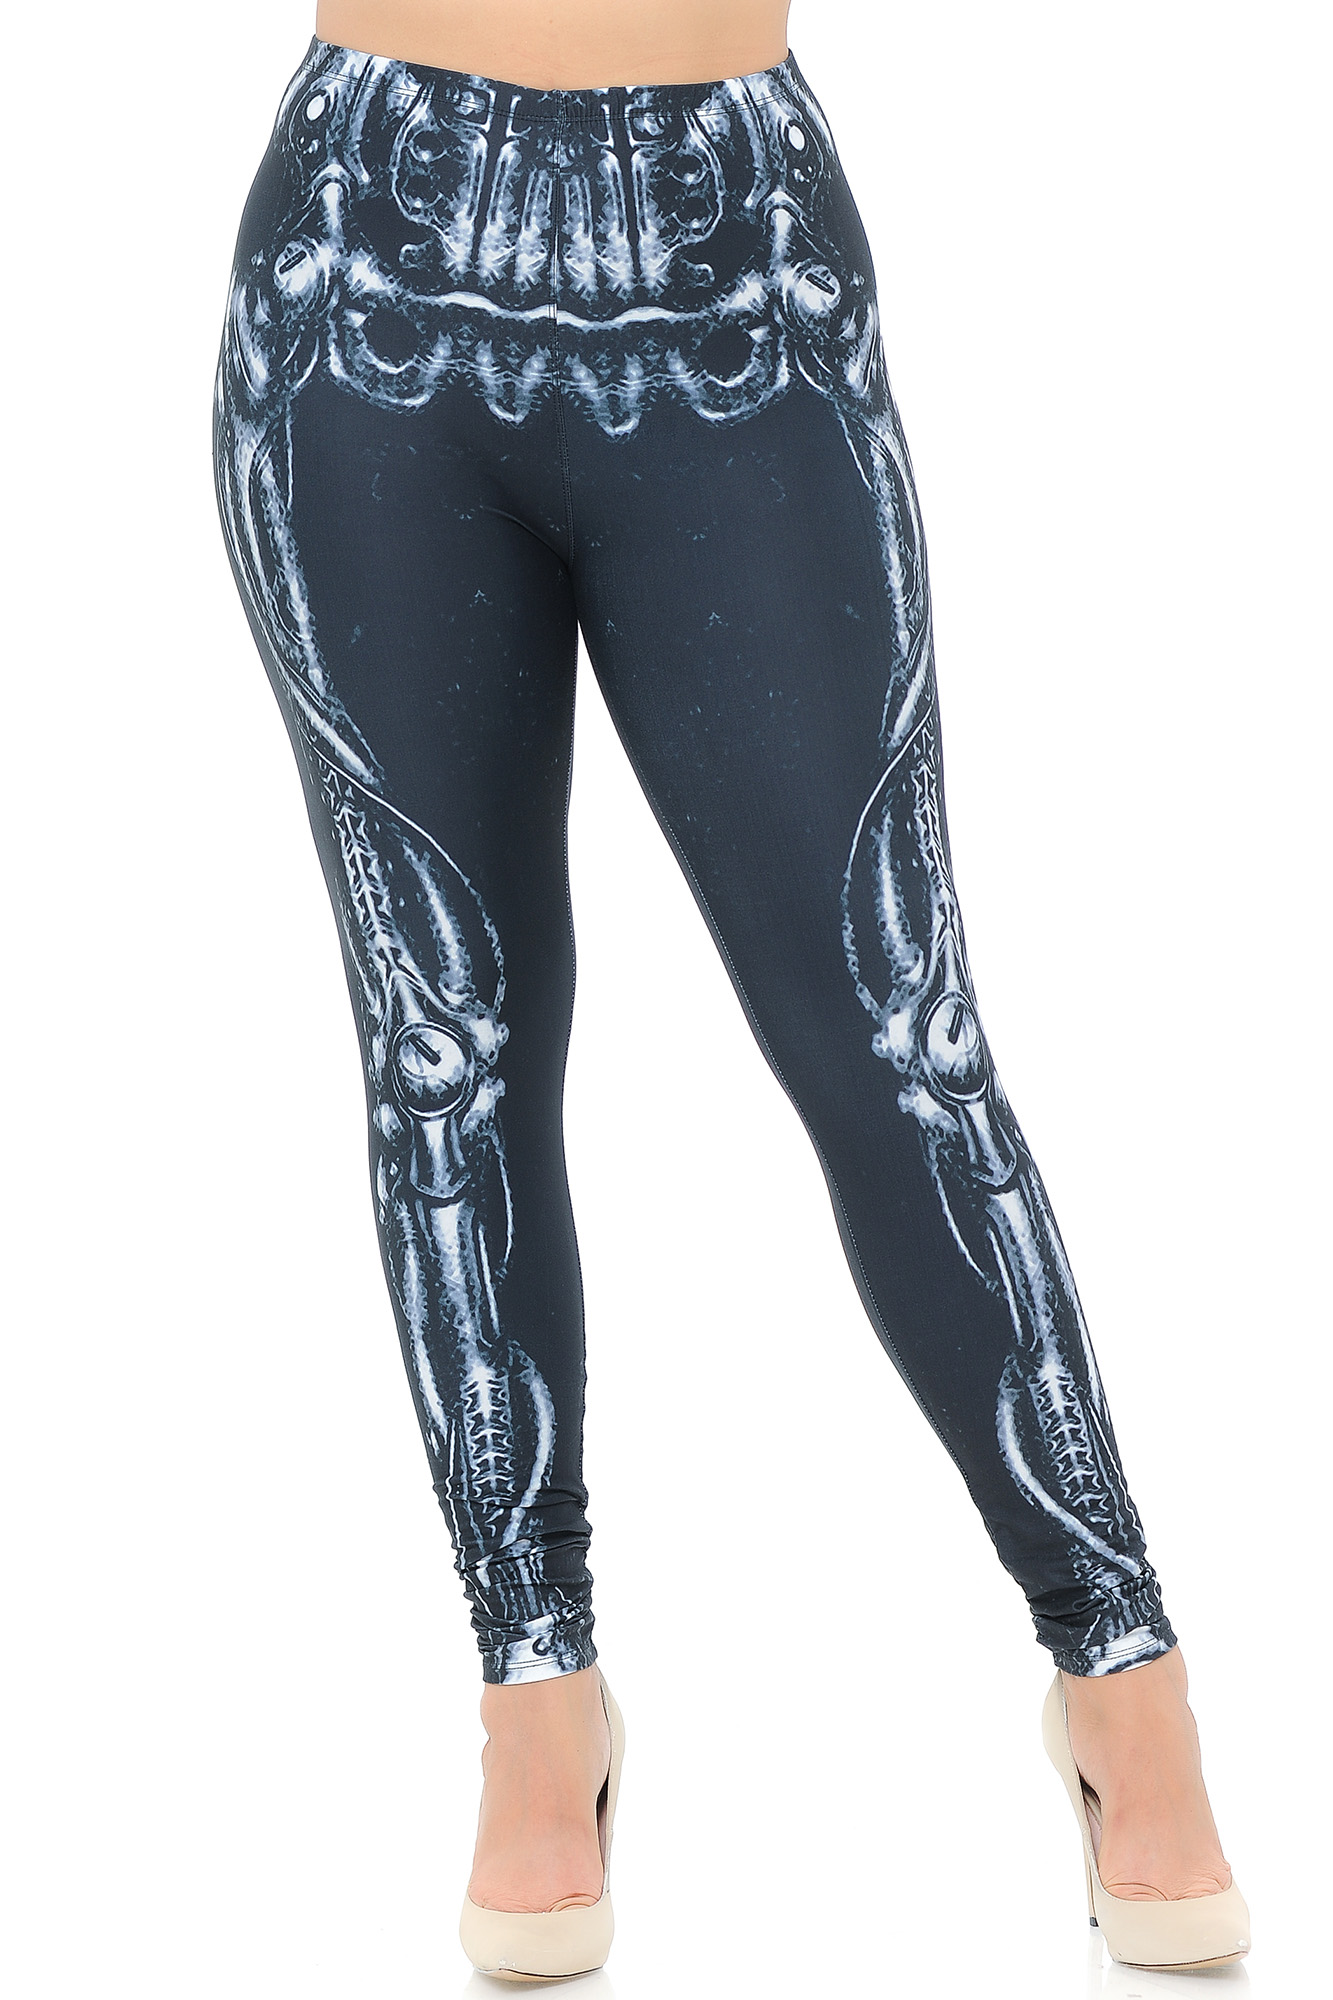 Wholesale Creamy Soft Black Bio Mechanical Skeleton Extra Plus Size Leggings (Steam Punk) - 3X-5X - USA Fashion™